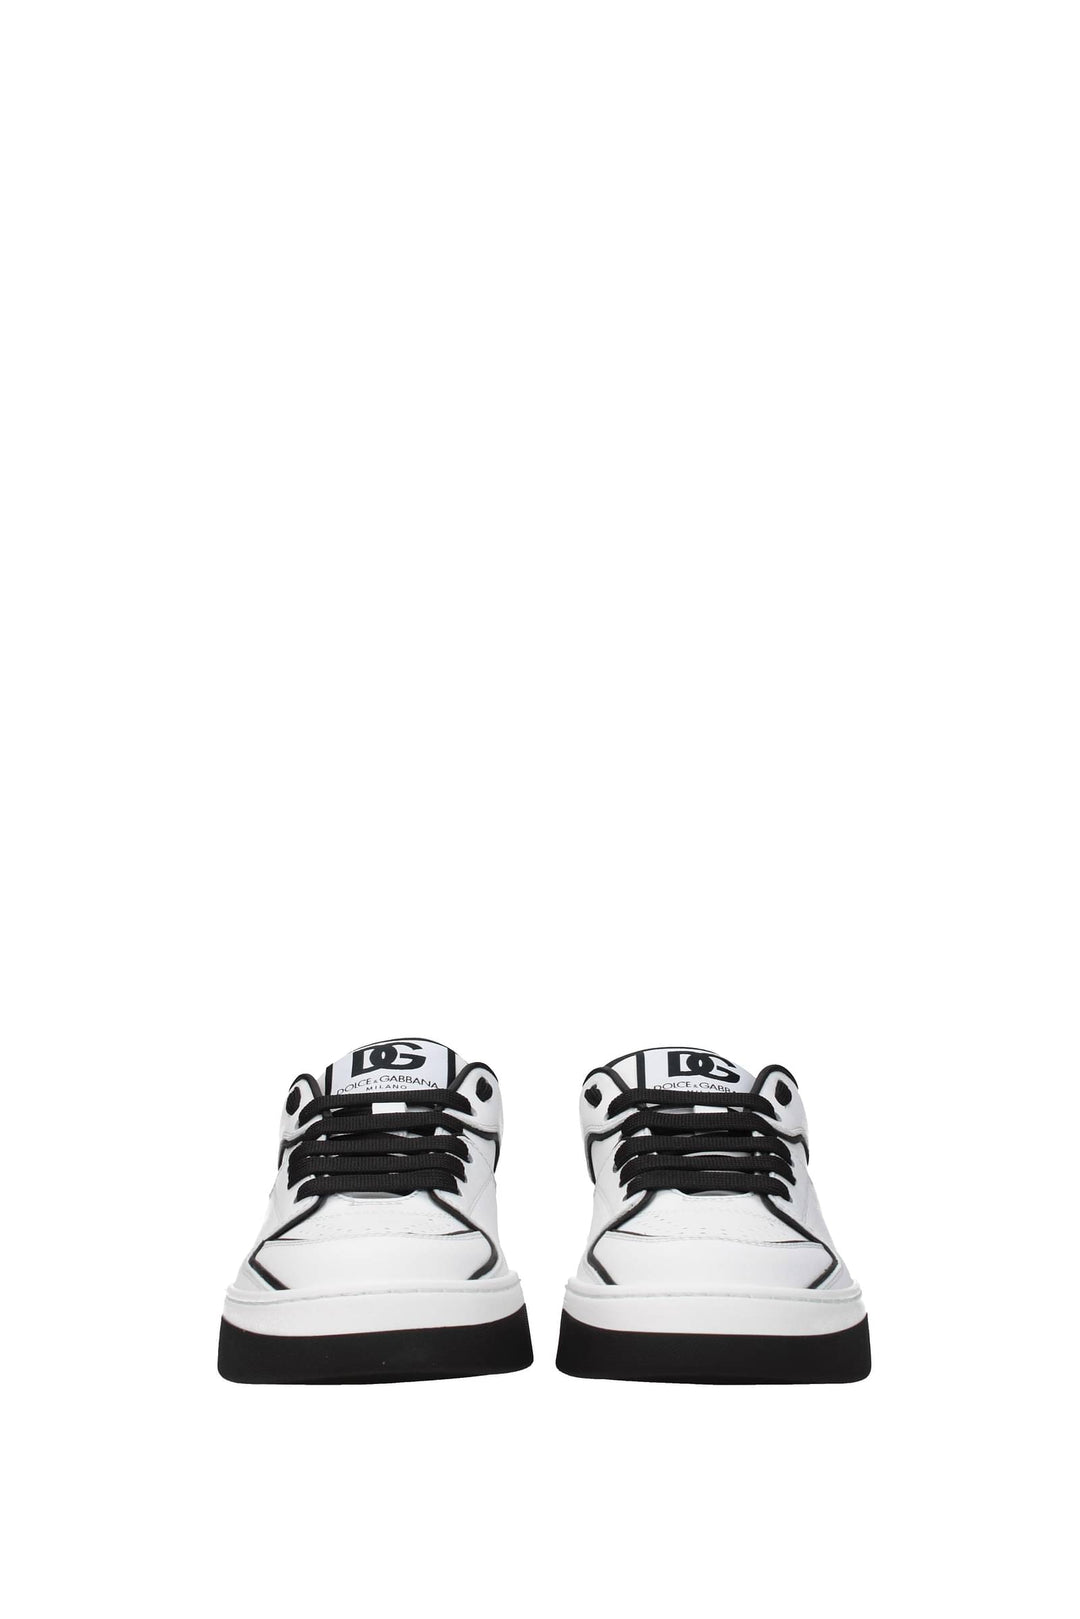 Sneakers New Roma Pelle Bianco Nero - Dolce&Gabbana - Donna